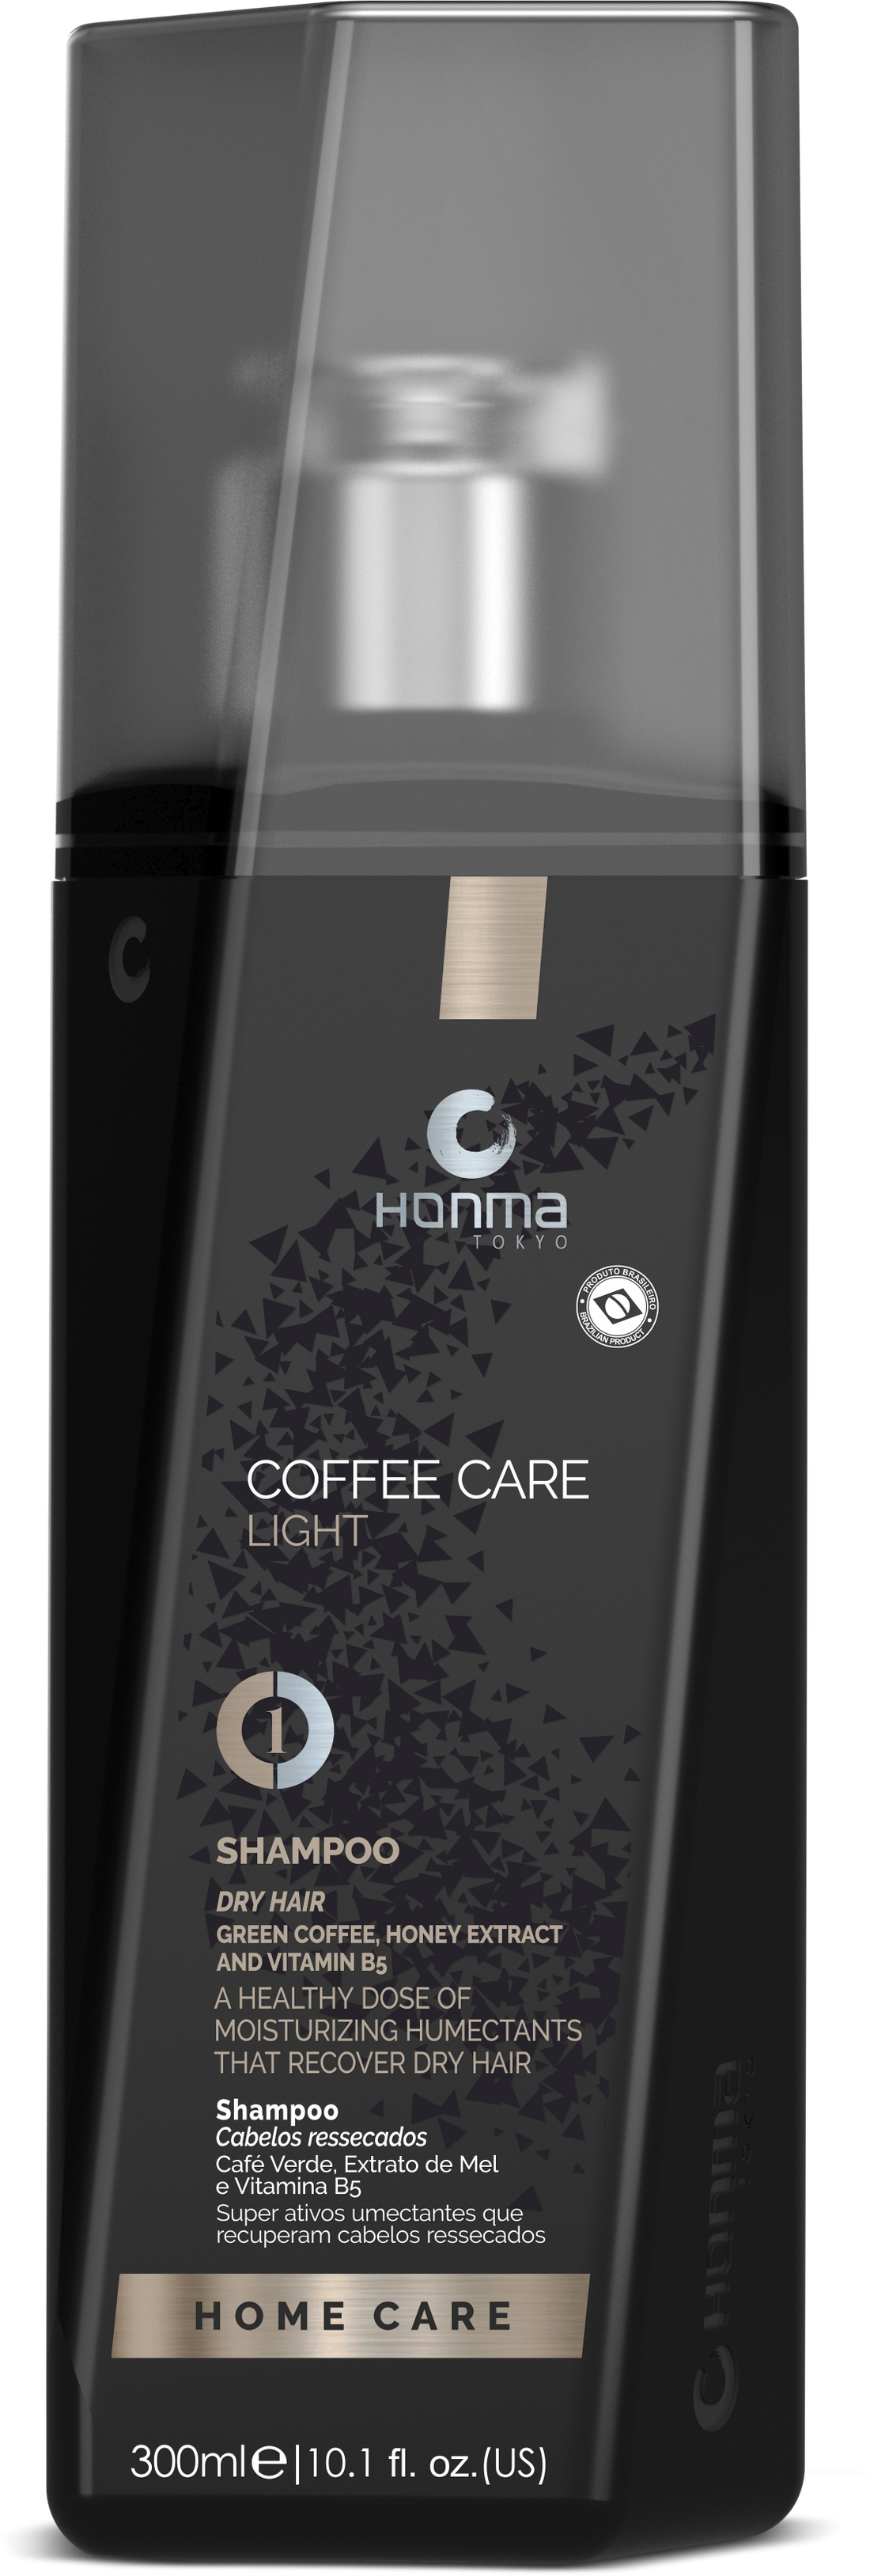 COFFEE CARE LIGHT SHAMPOO - HOME CARE